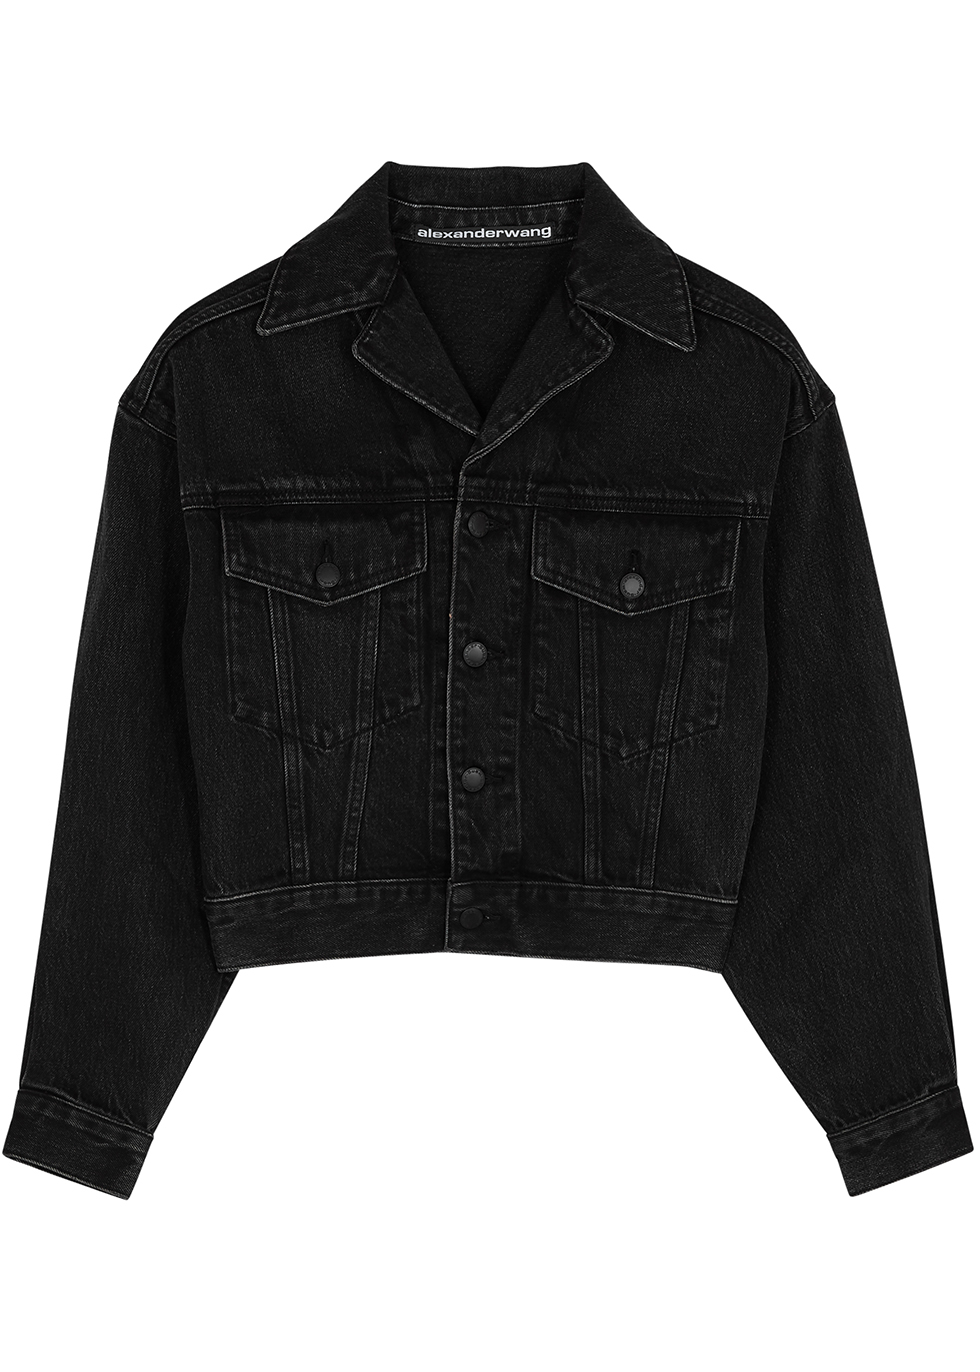 alexanderwang.t Black cropped denim jacket - Harvey Nichols